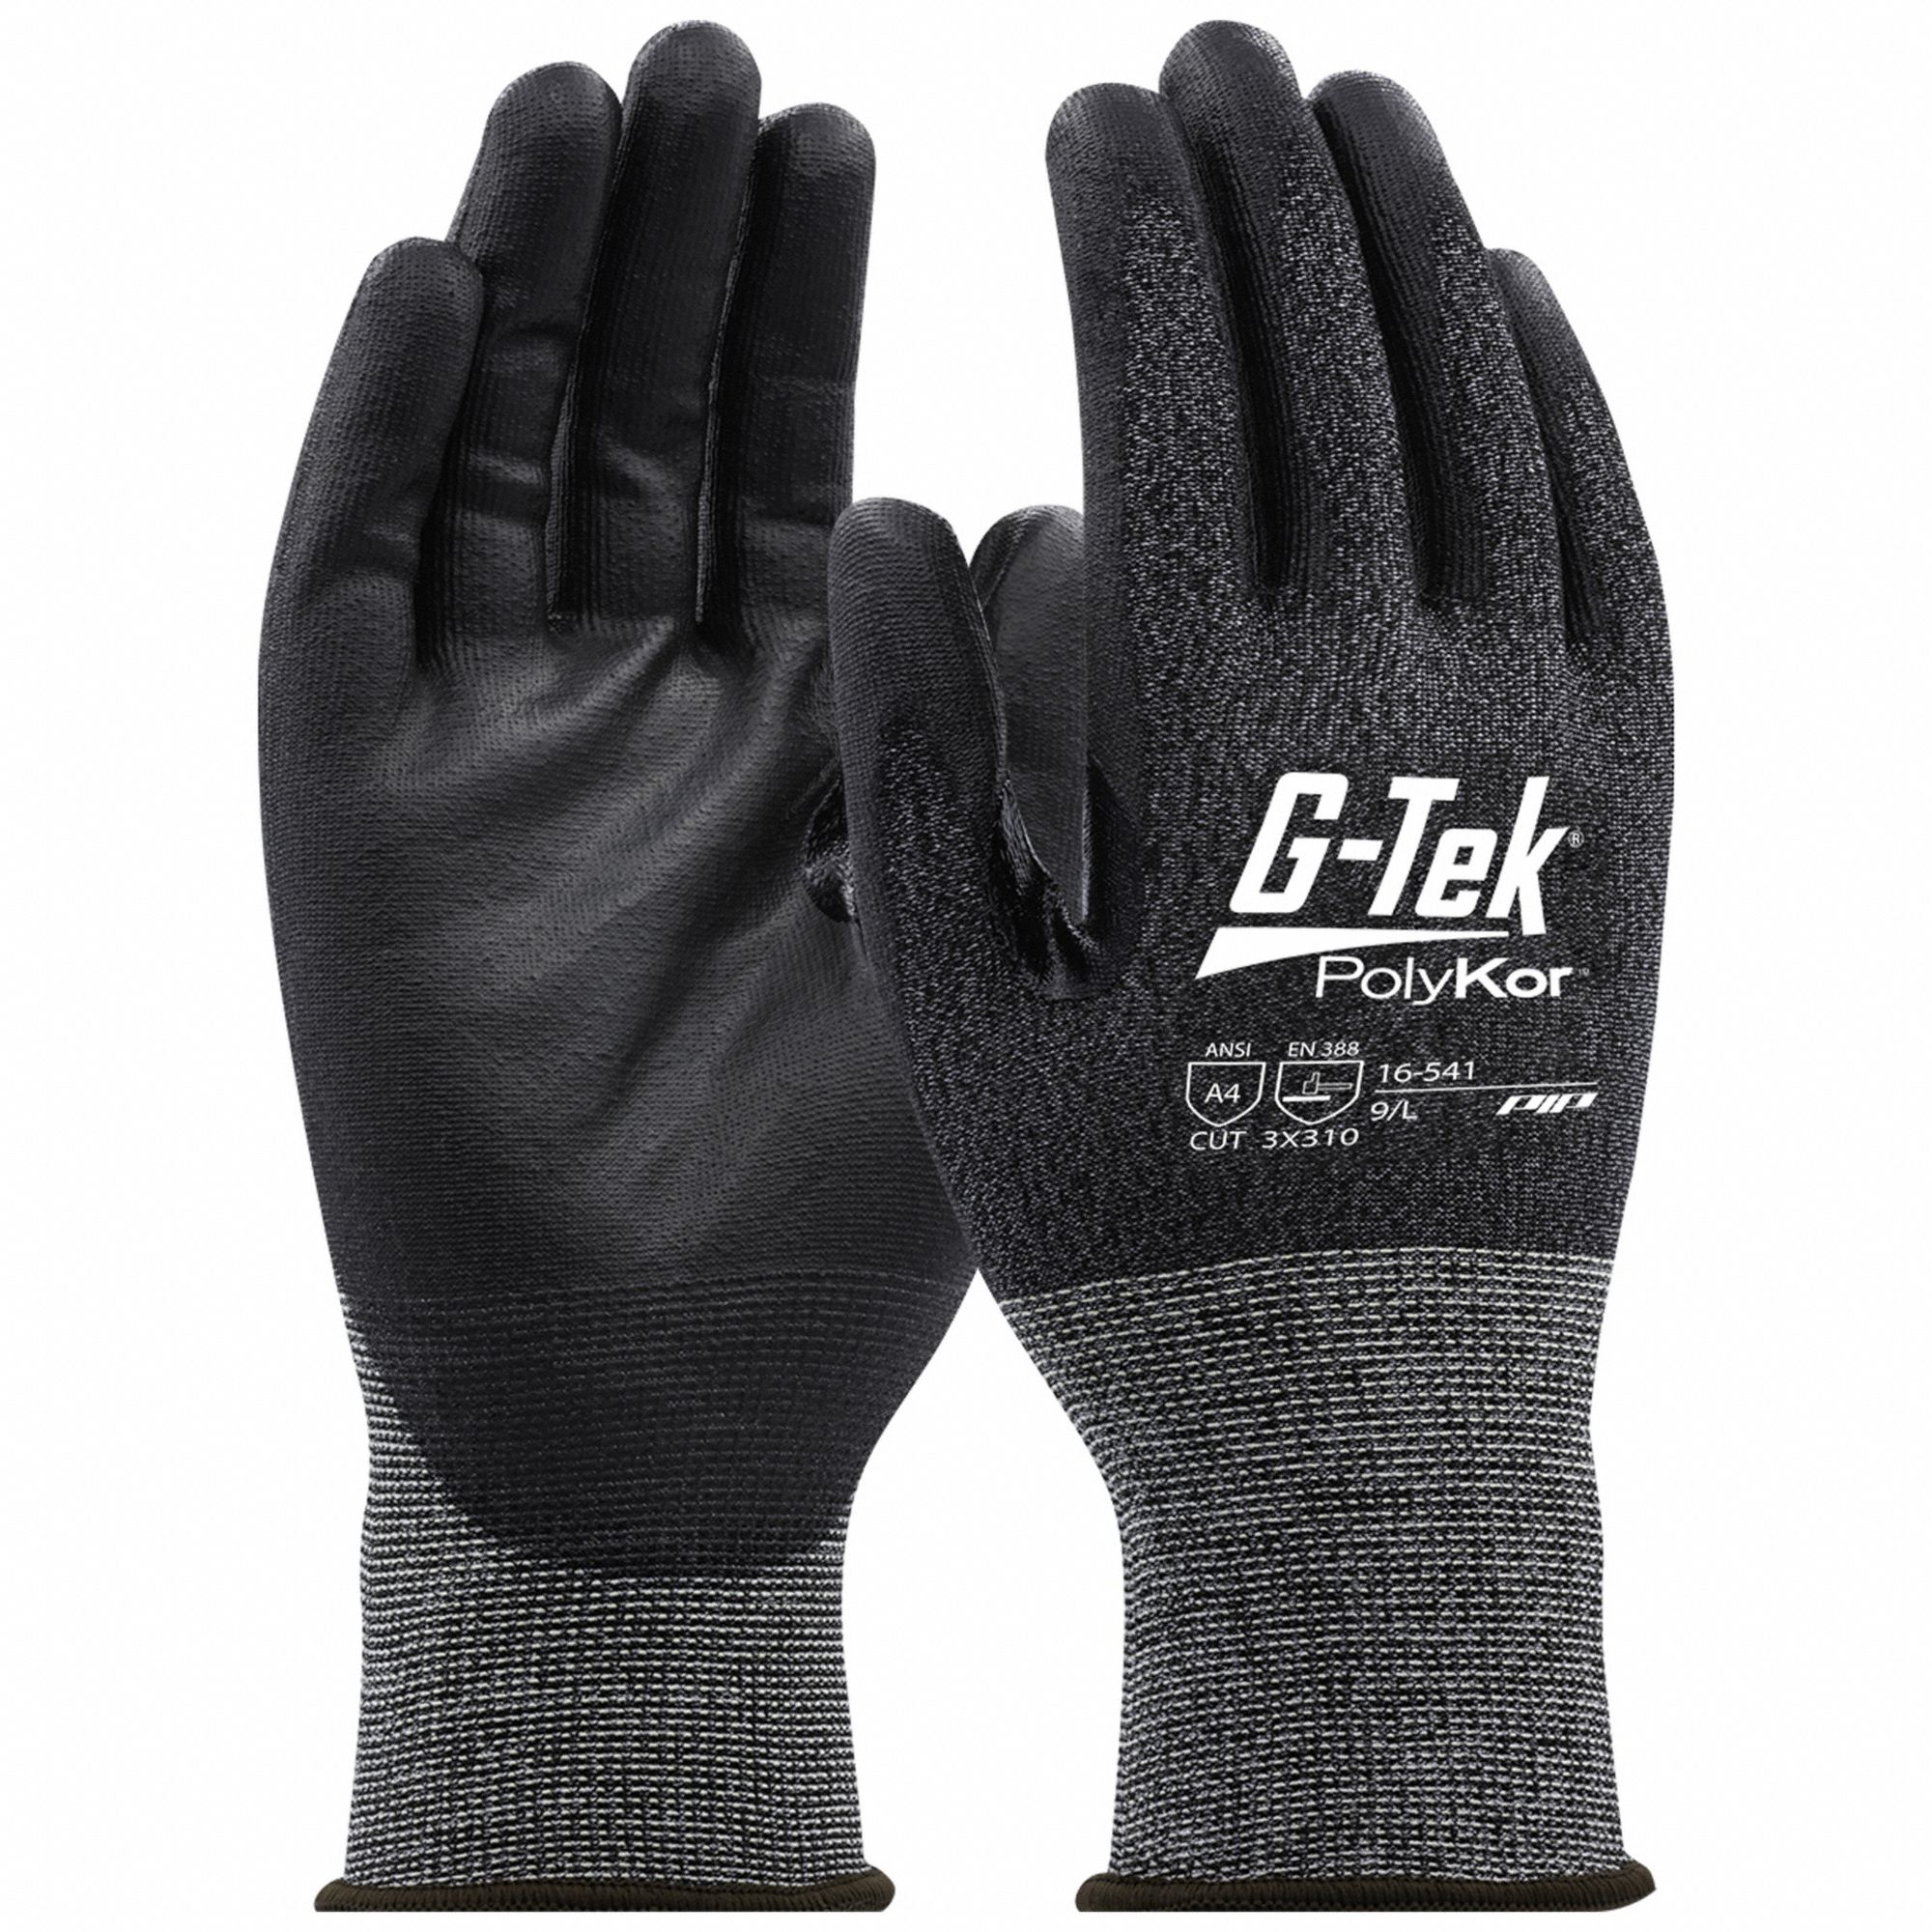 Knit Gloves: 2XL ( 11 ), ANSI Cut Level A4, Palm, Dipped, Polyurethane, Gray, 1 PR